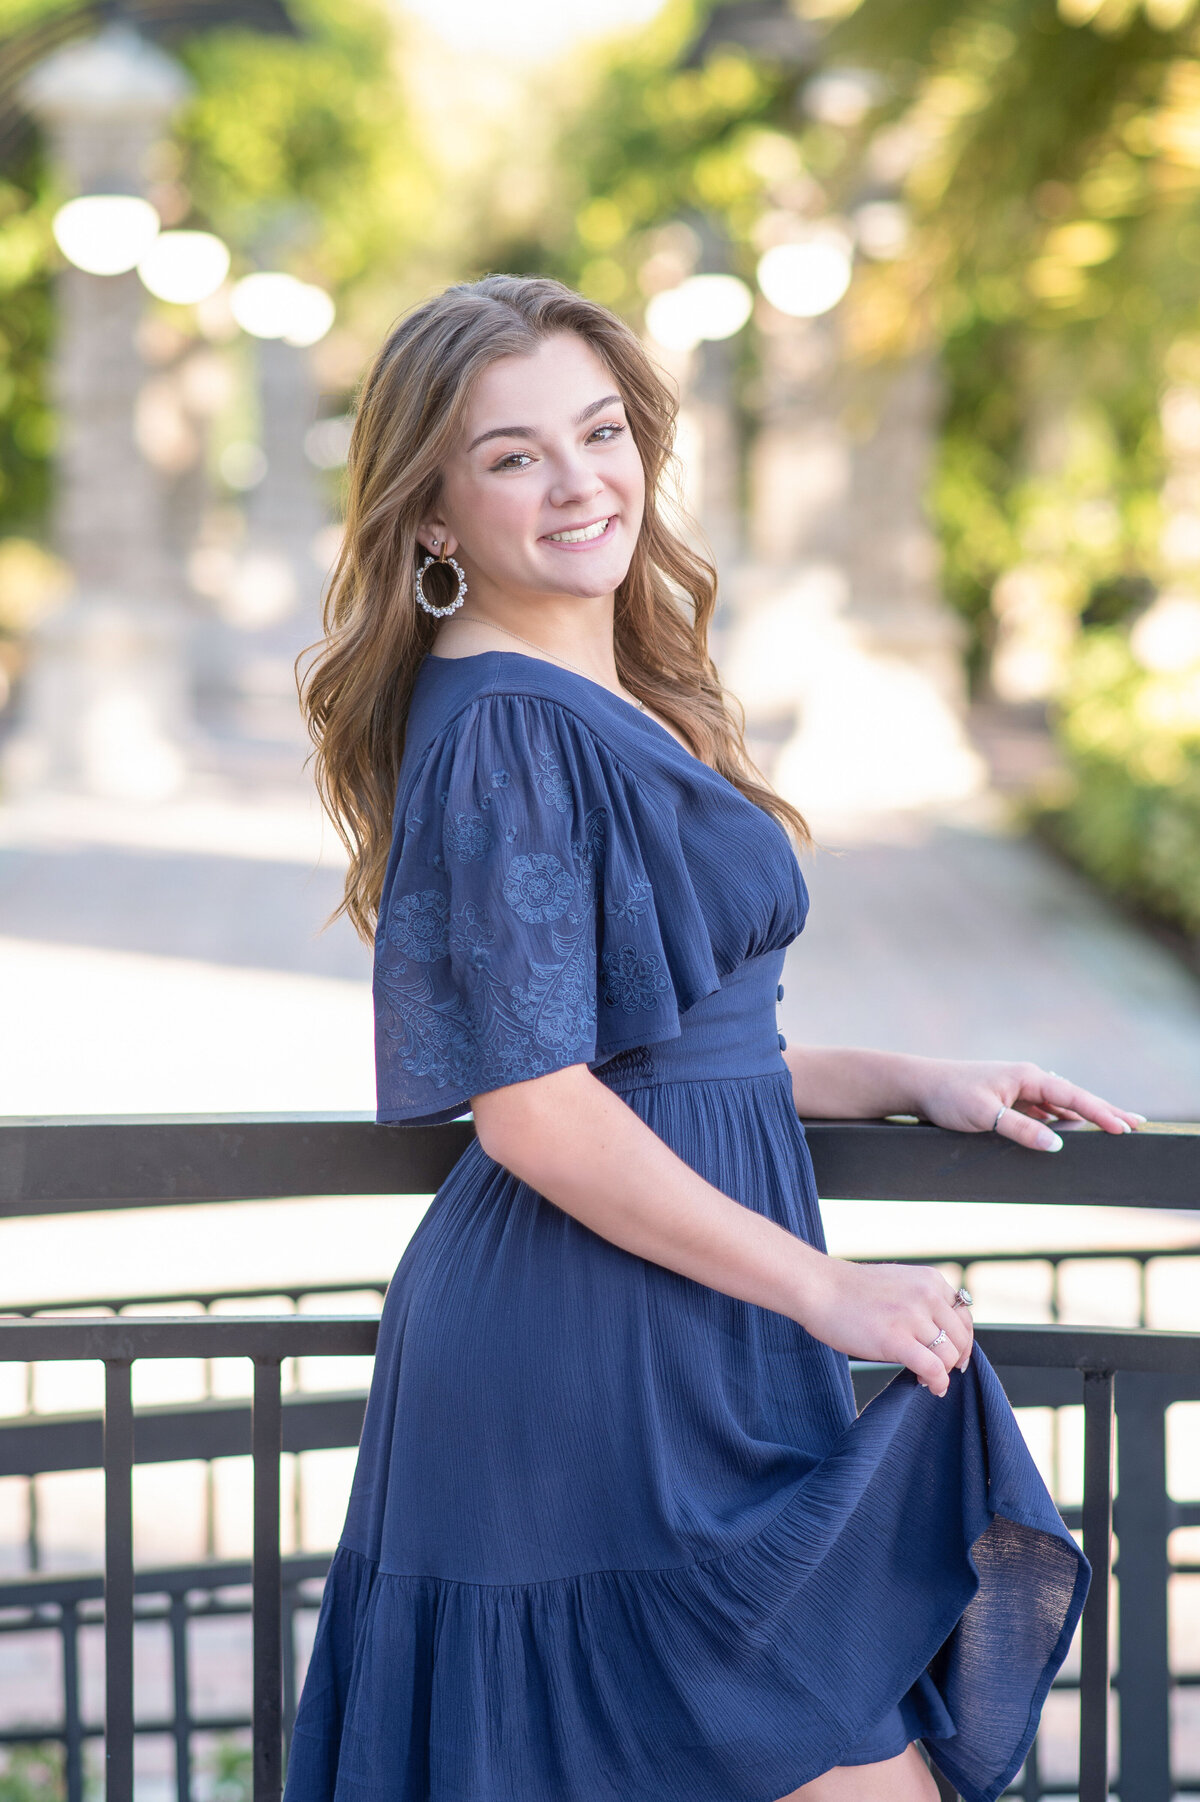 High school senior girl holding dress and railing smiles at camera.